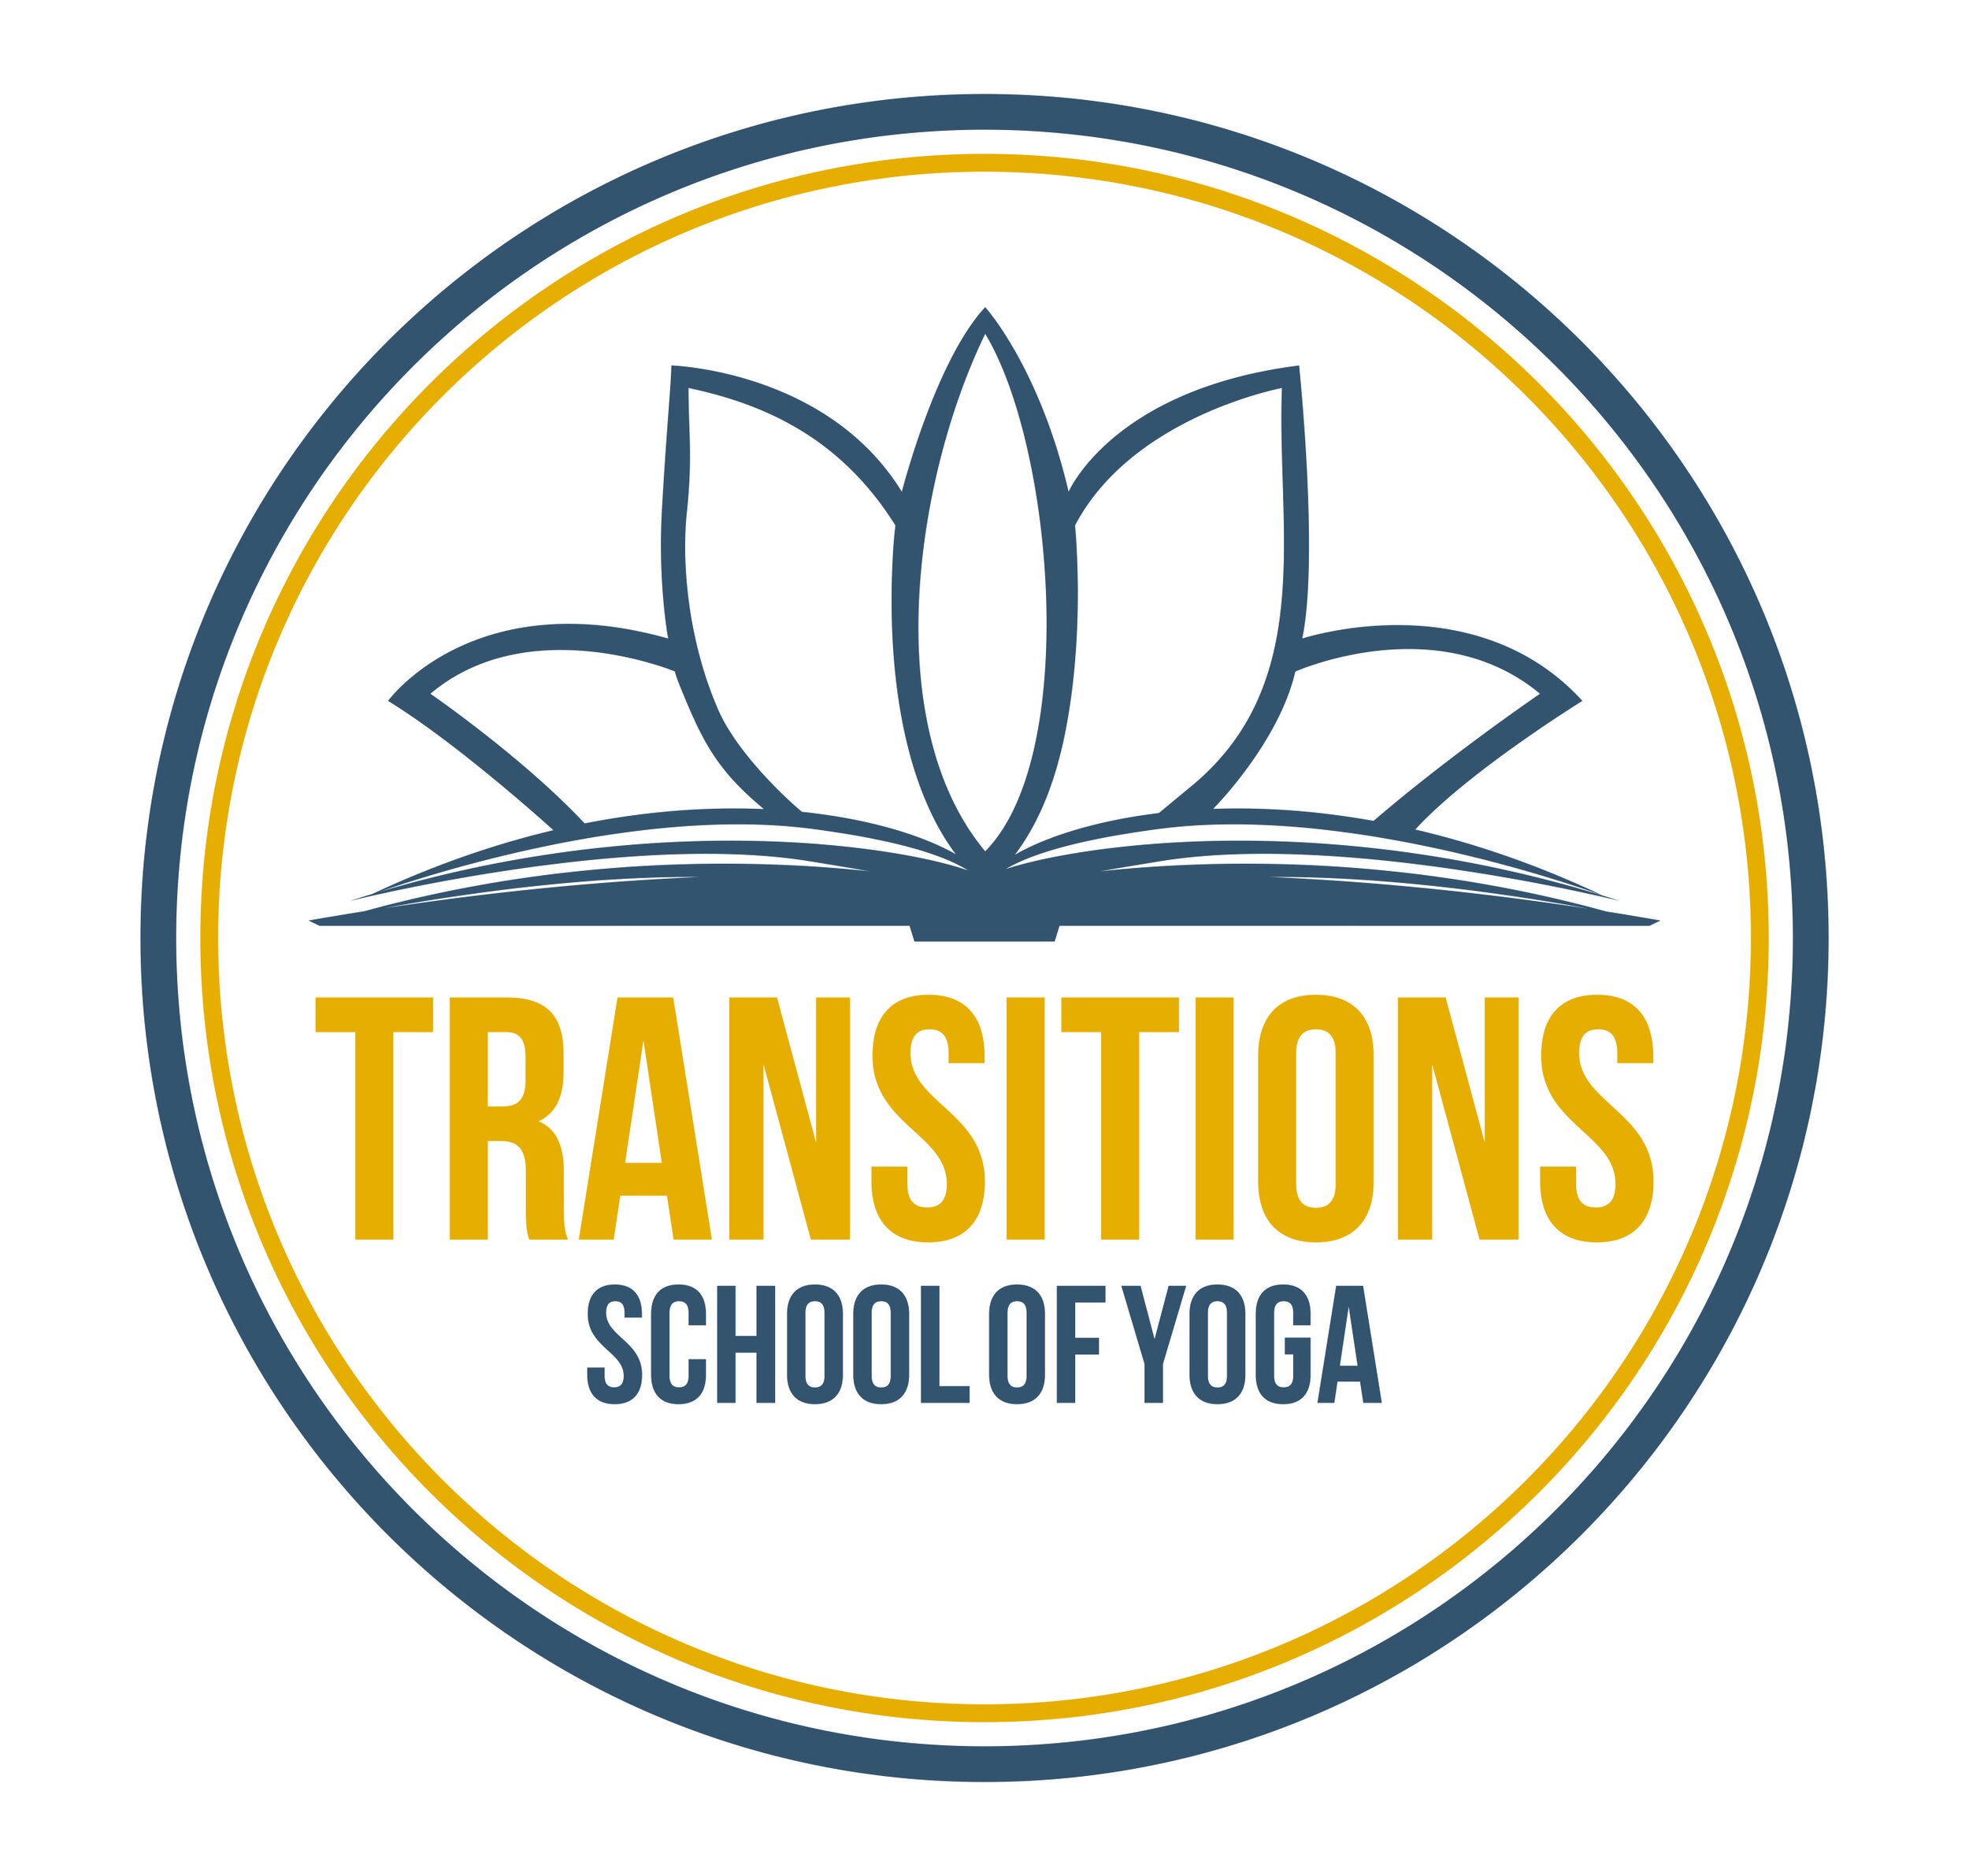 How do I prepare for my Yoga class - The Yoga Institute